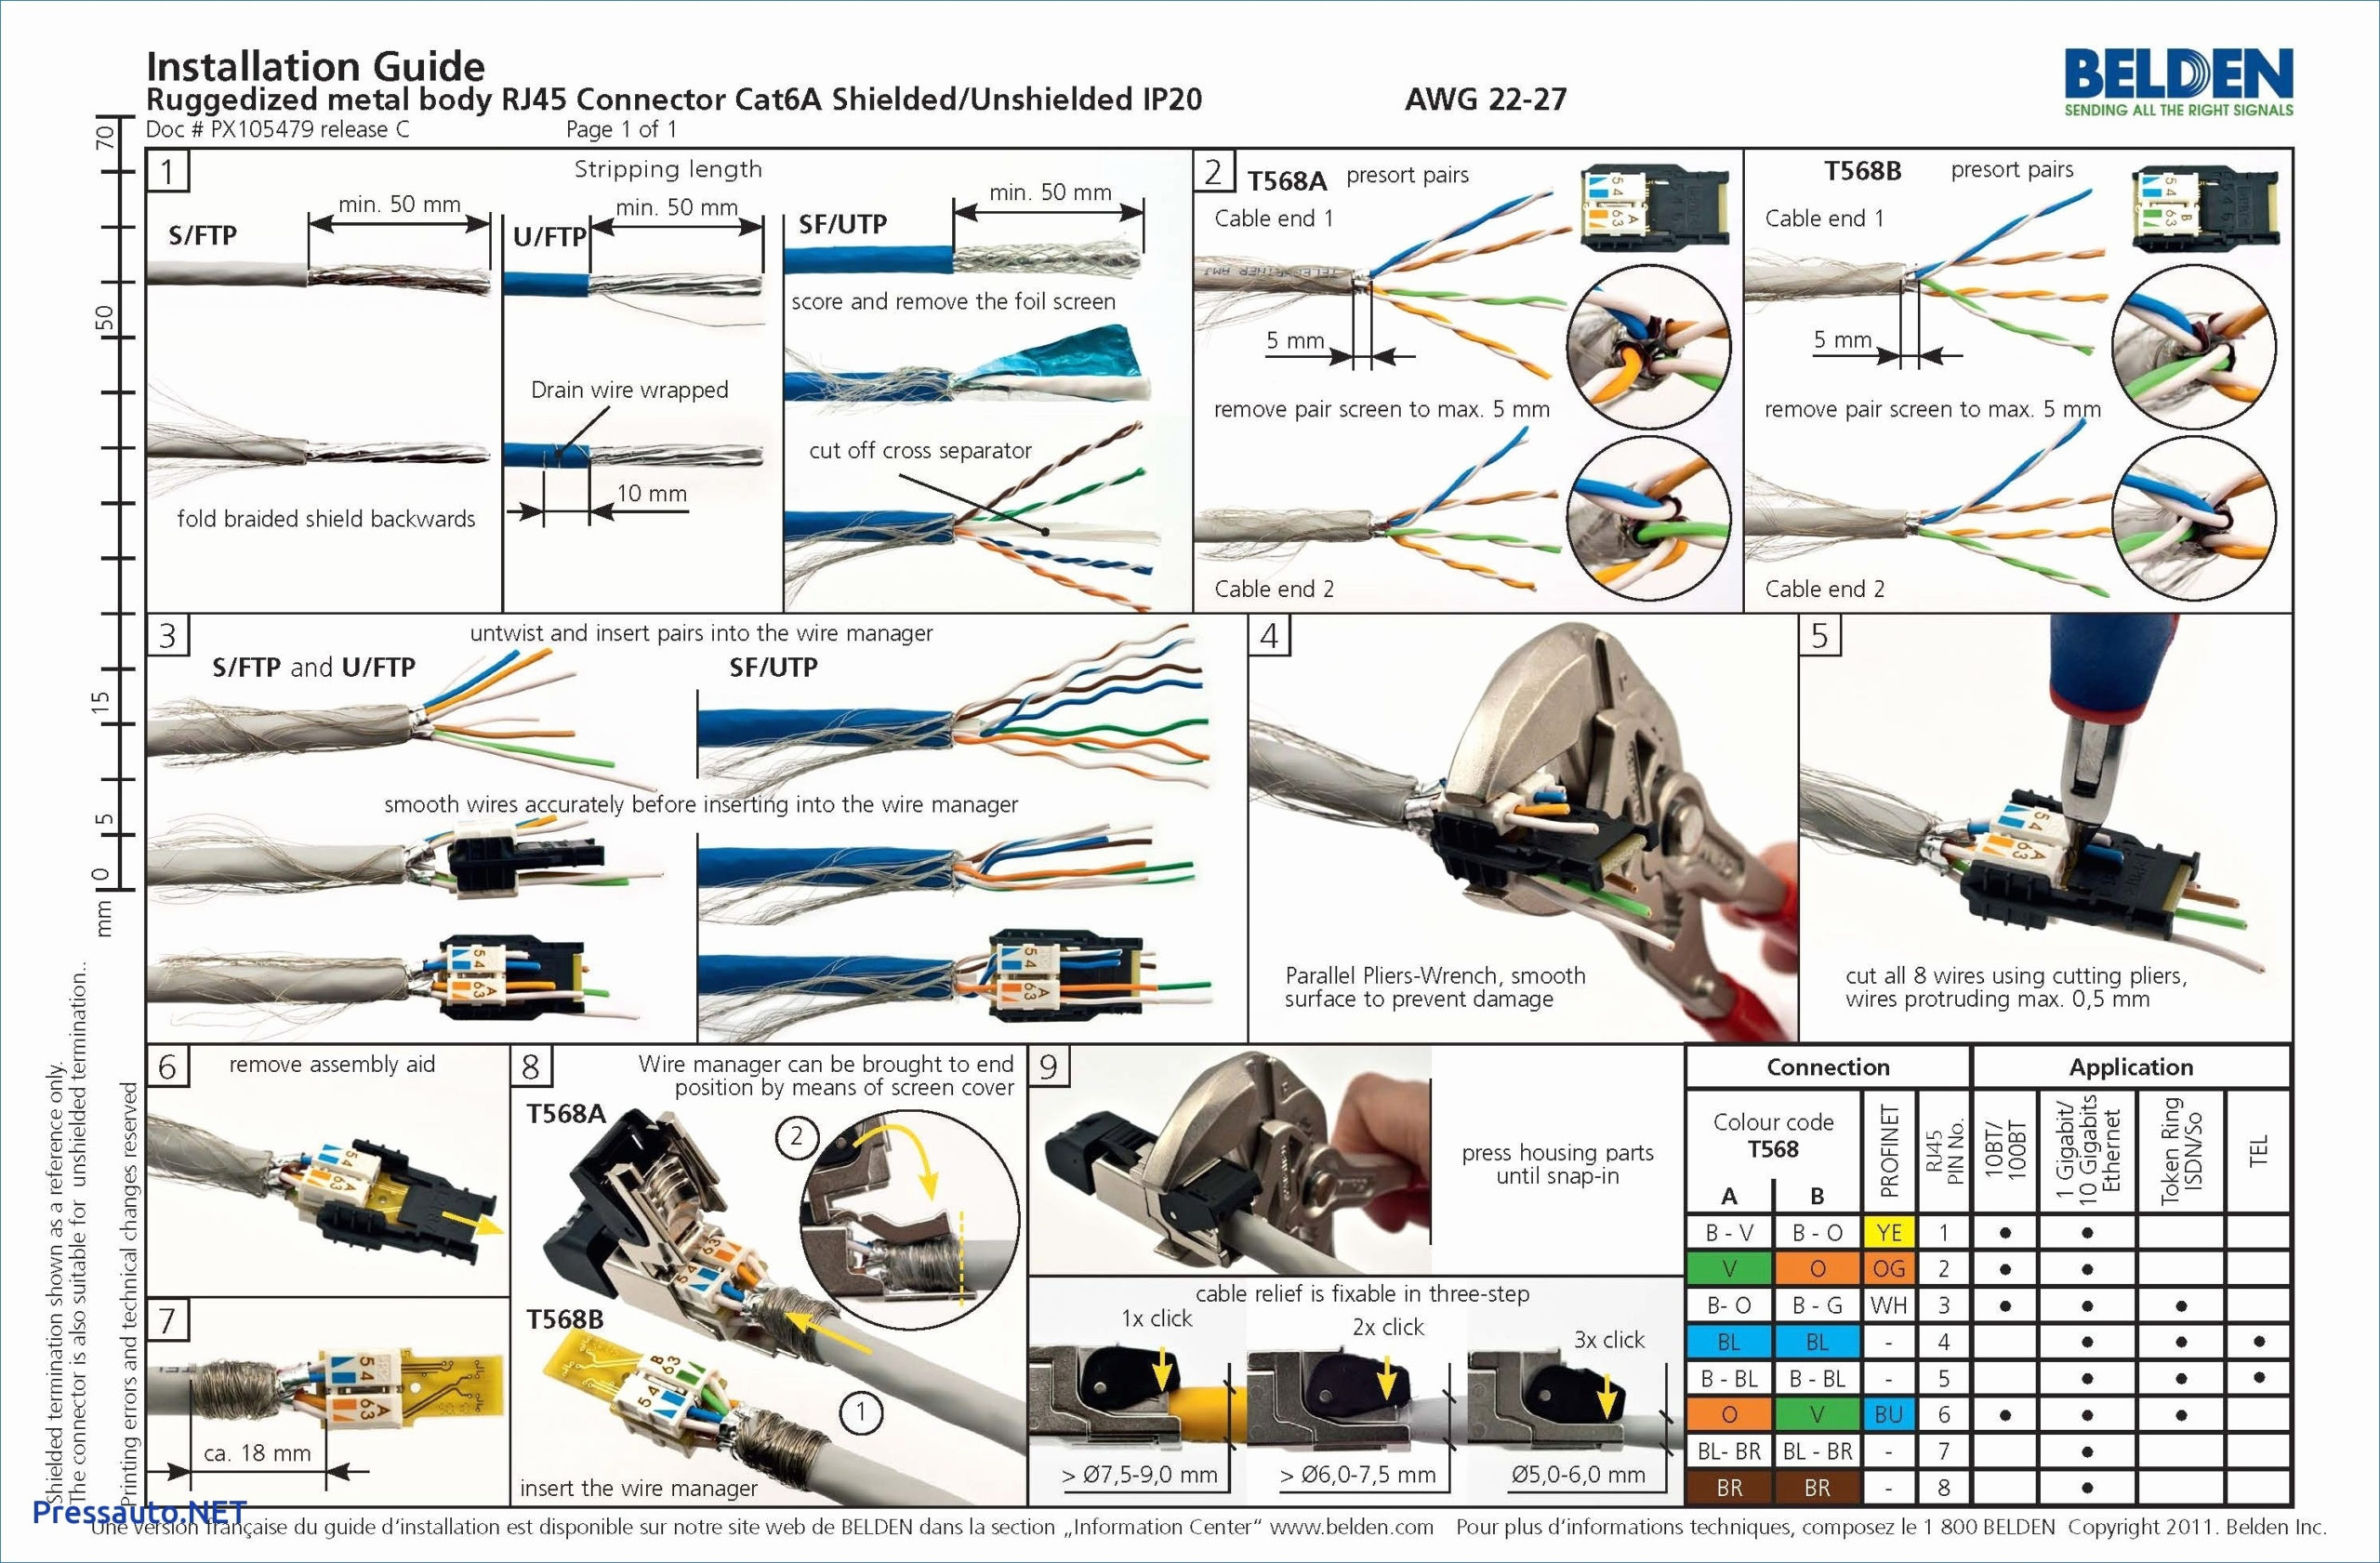 Cat 6 Ethernet Wall Socket Wiring Diagram